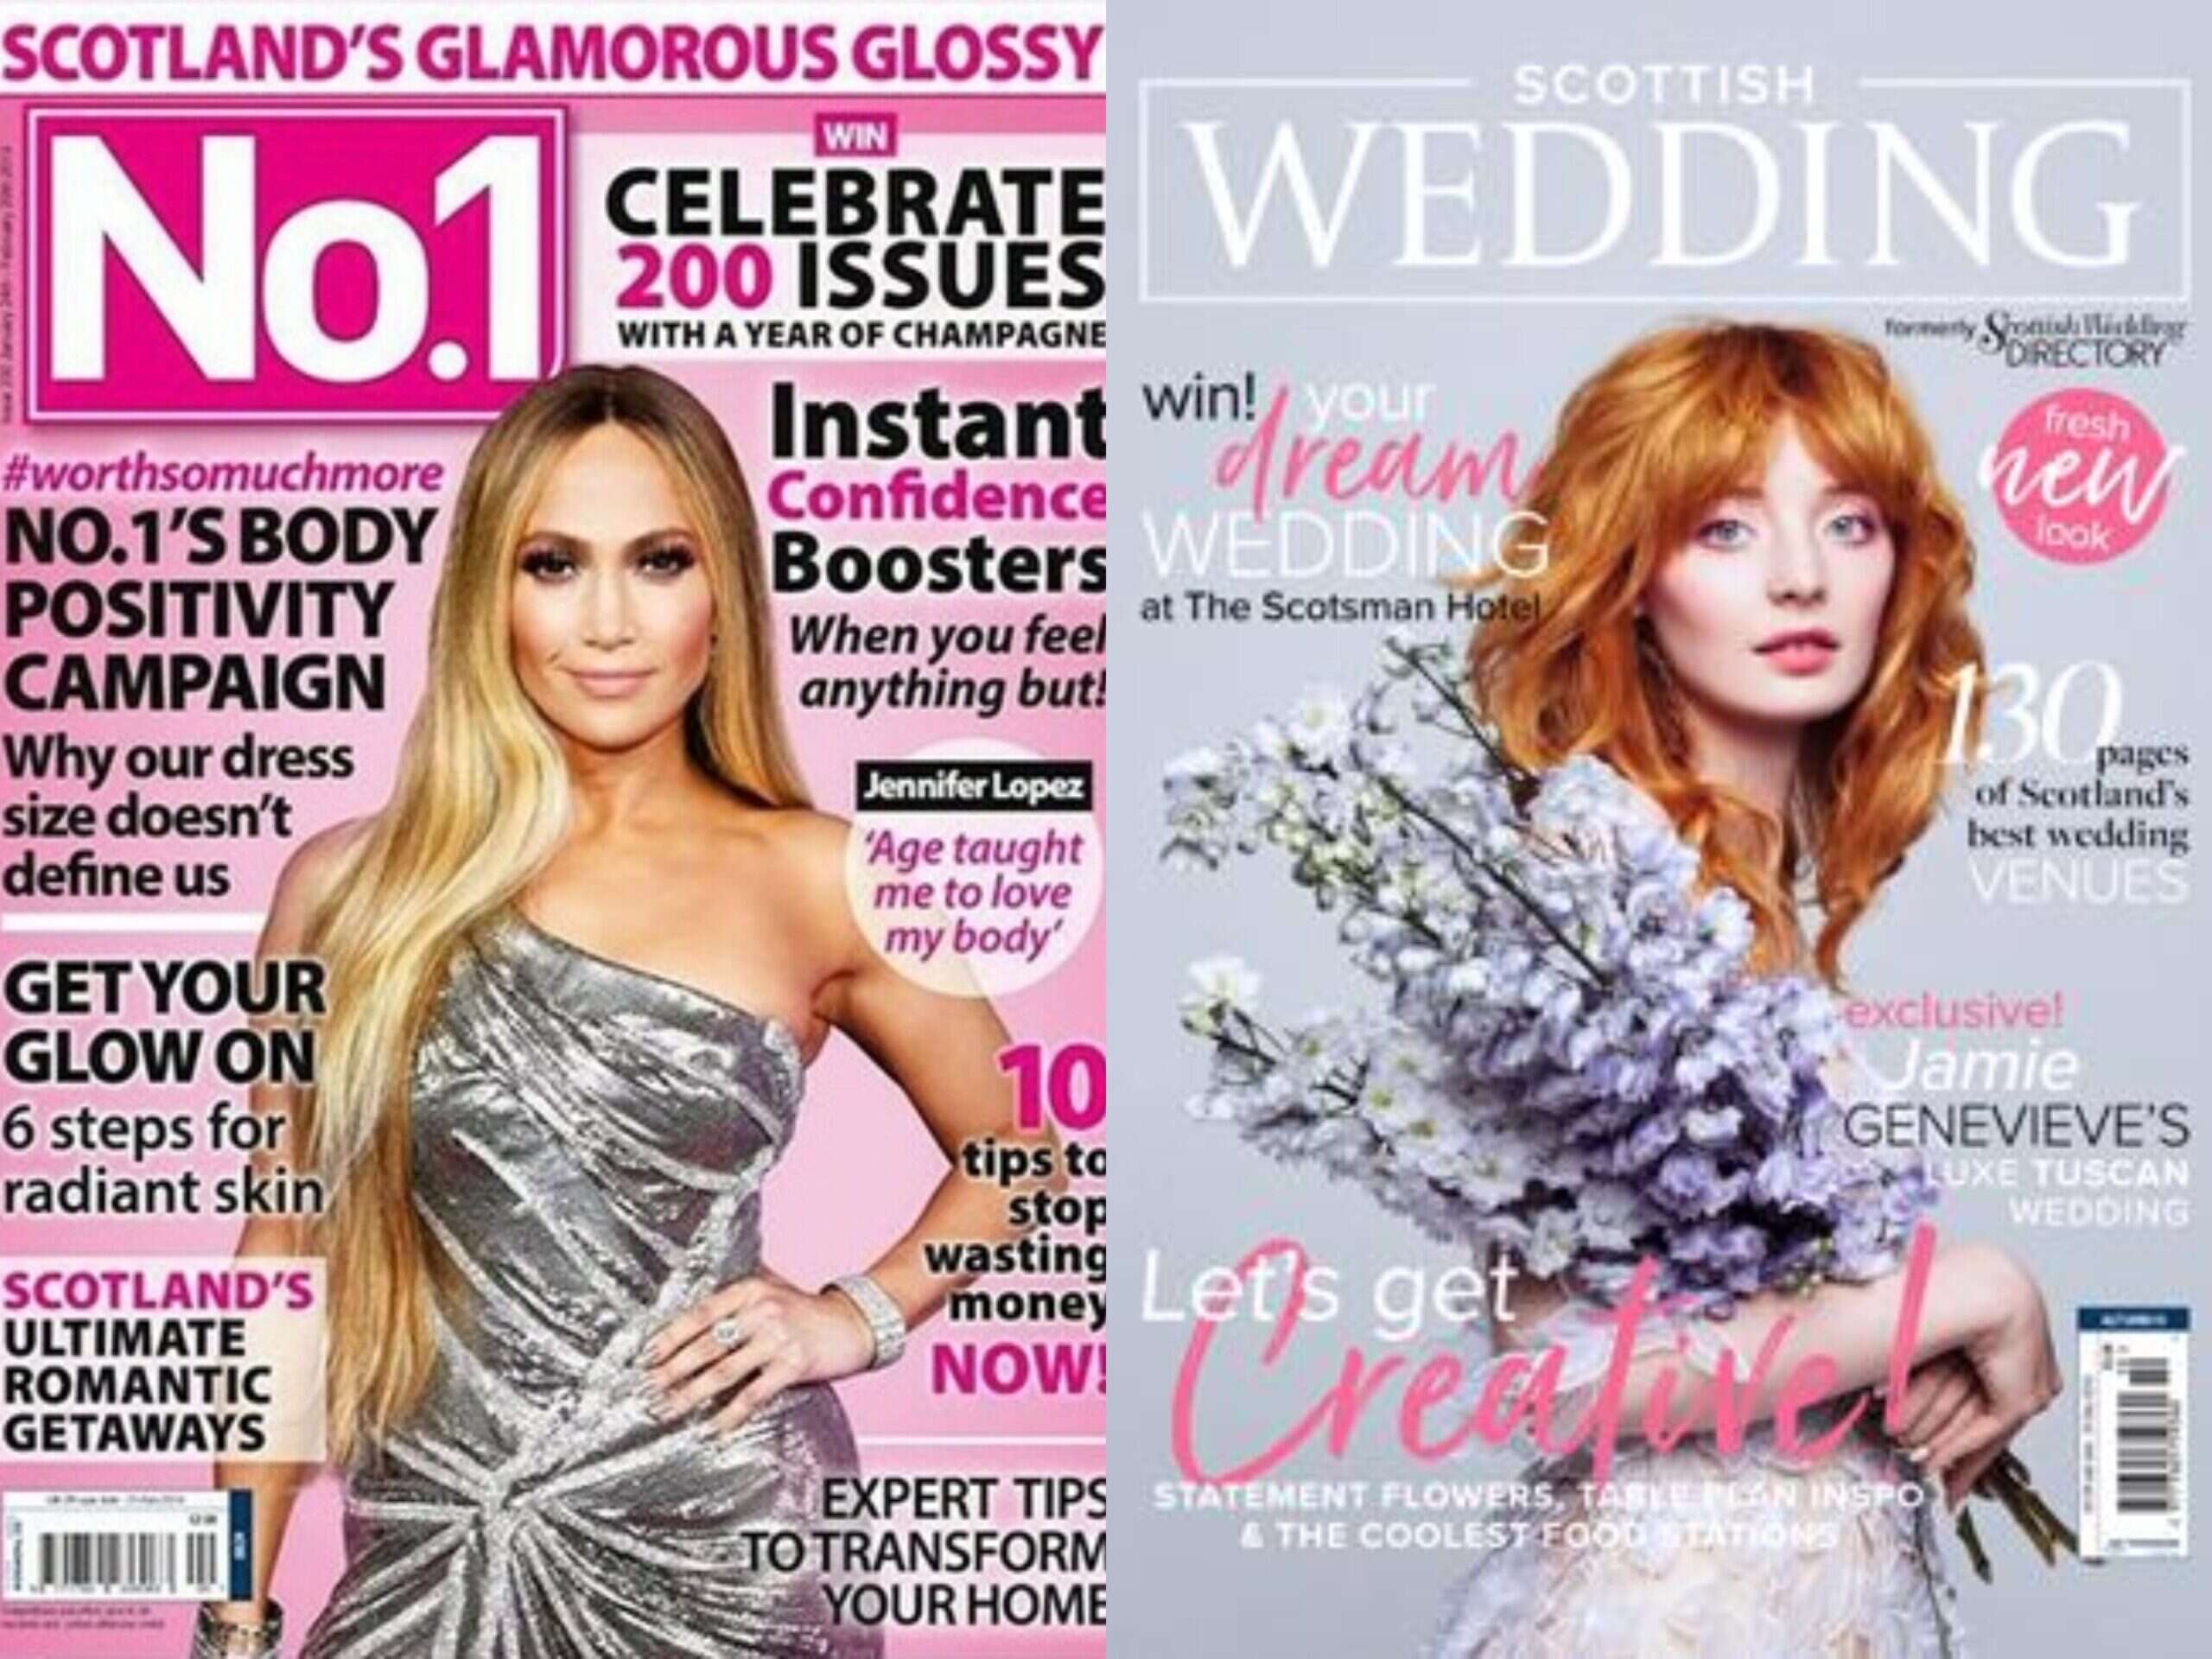 No. 1 magazine and Scottish Wedding magazine